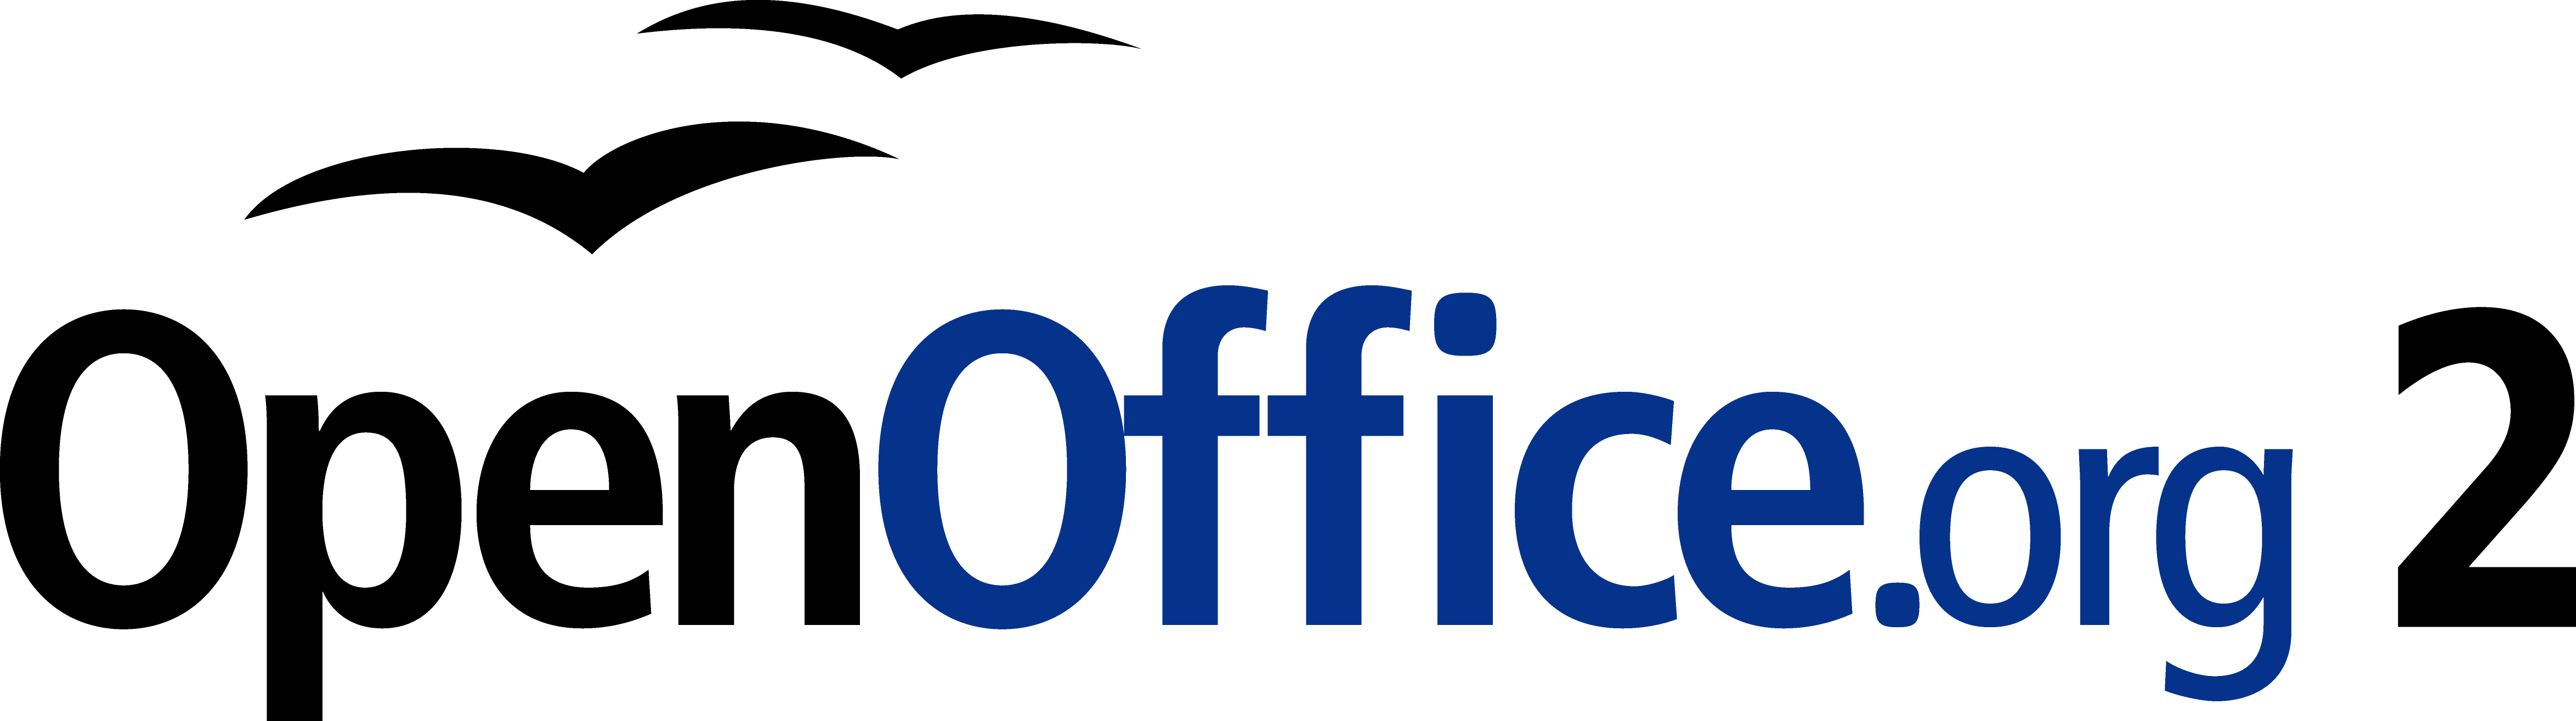 Org.Apache Logo - OpenOffice.org Art - Official Logos Gallery